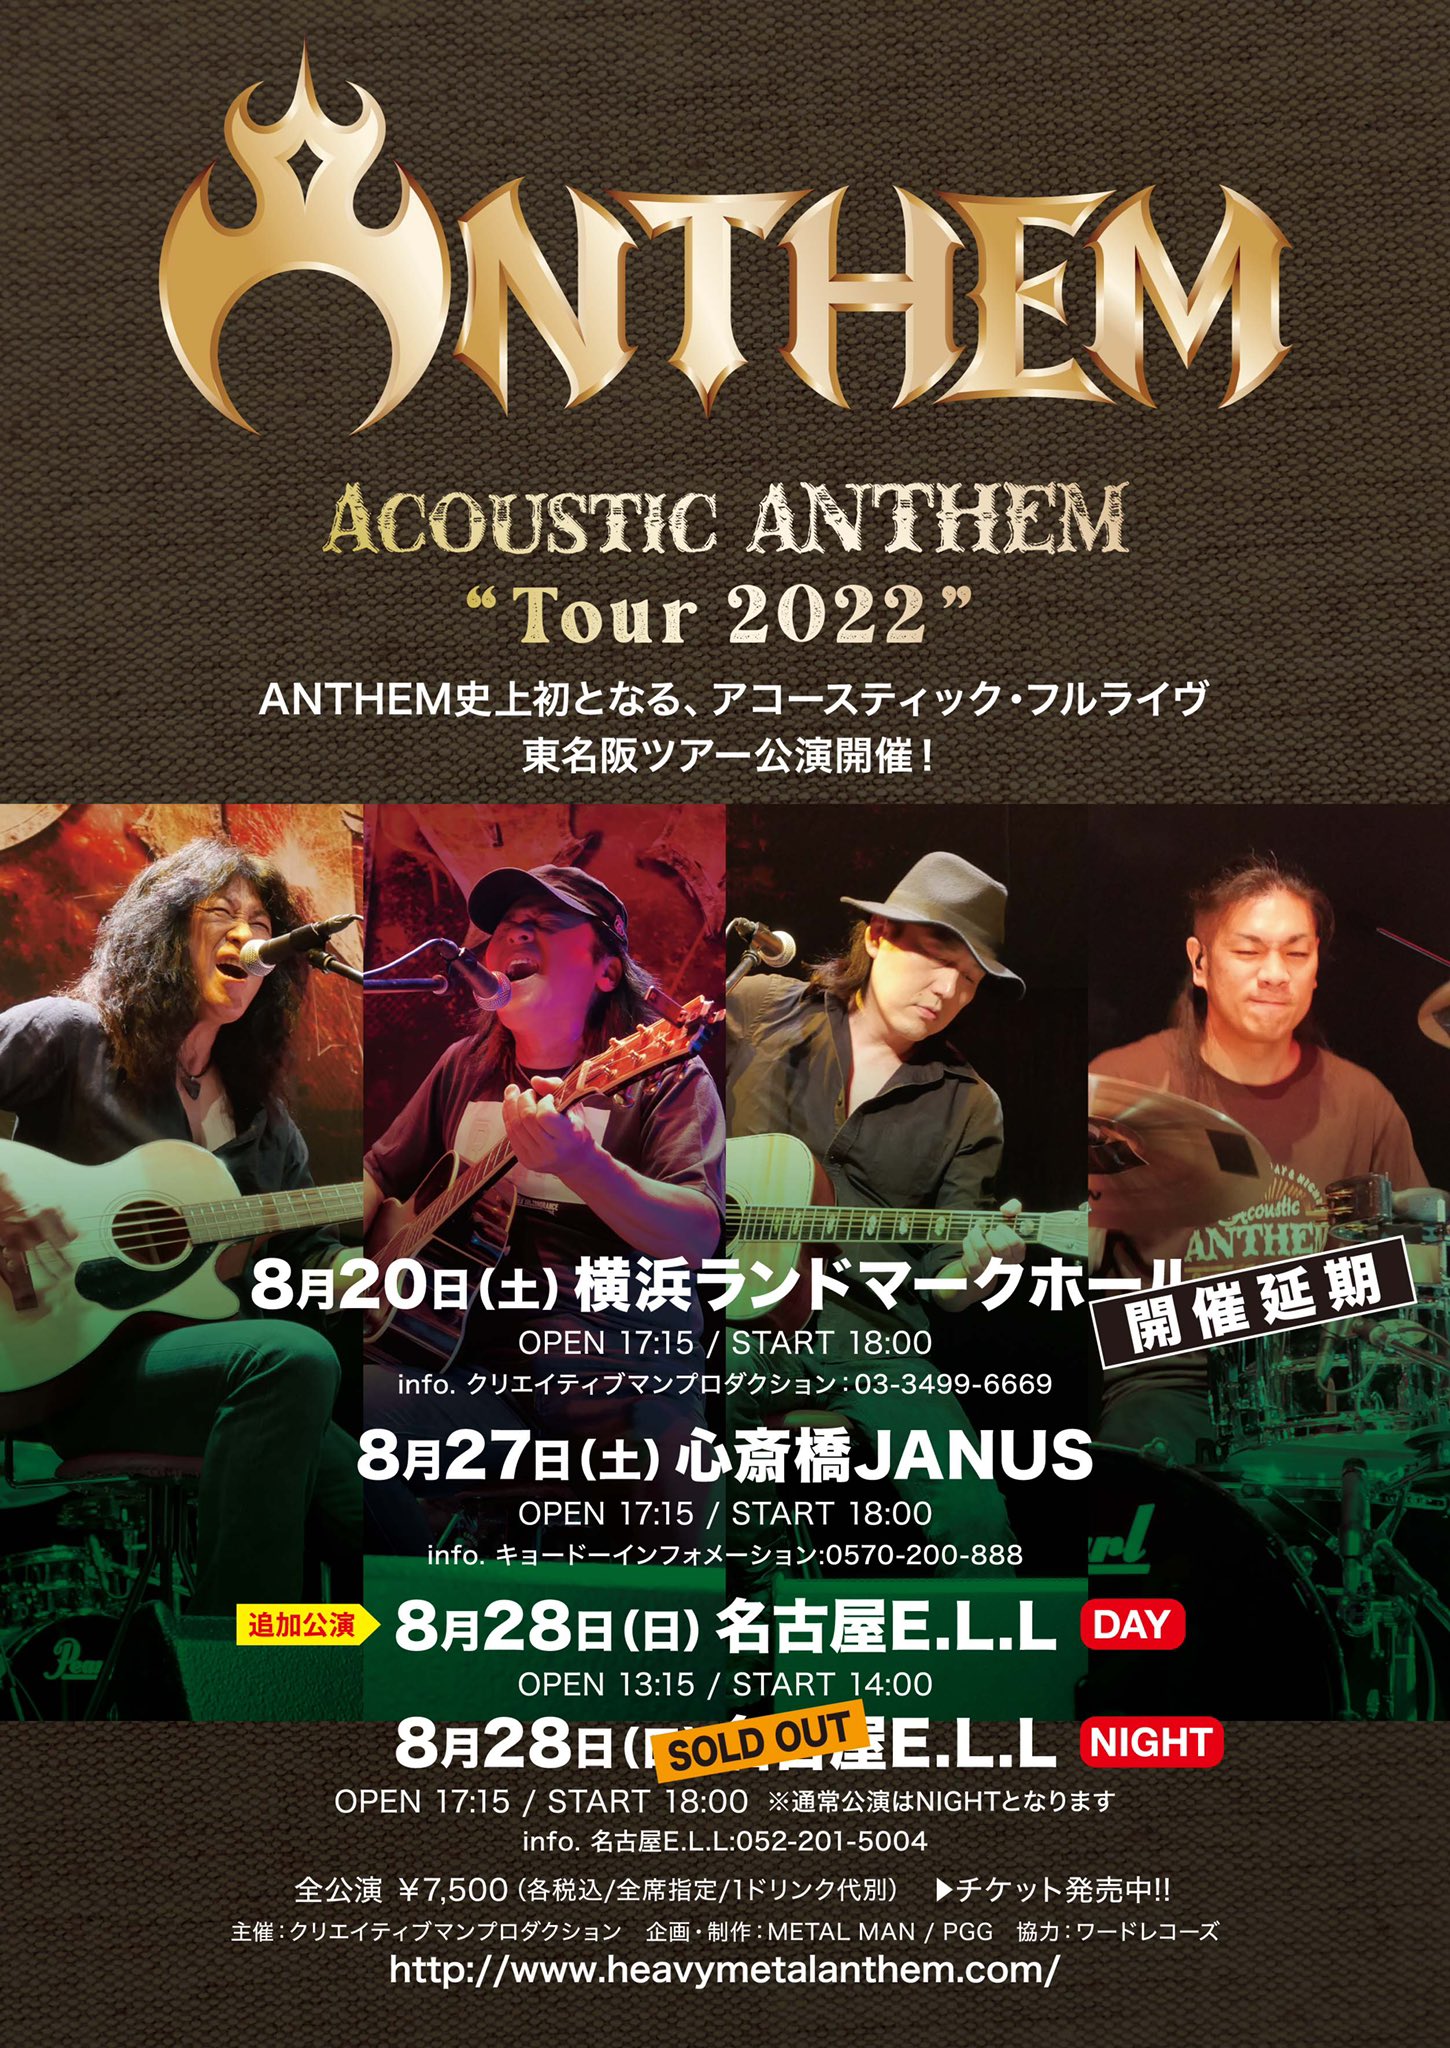 ACOUSTIC ANTHEM “Tour 2022” NIGHT公演 [愛知]